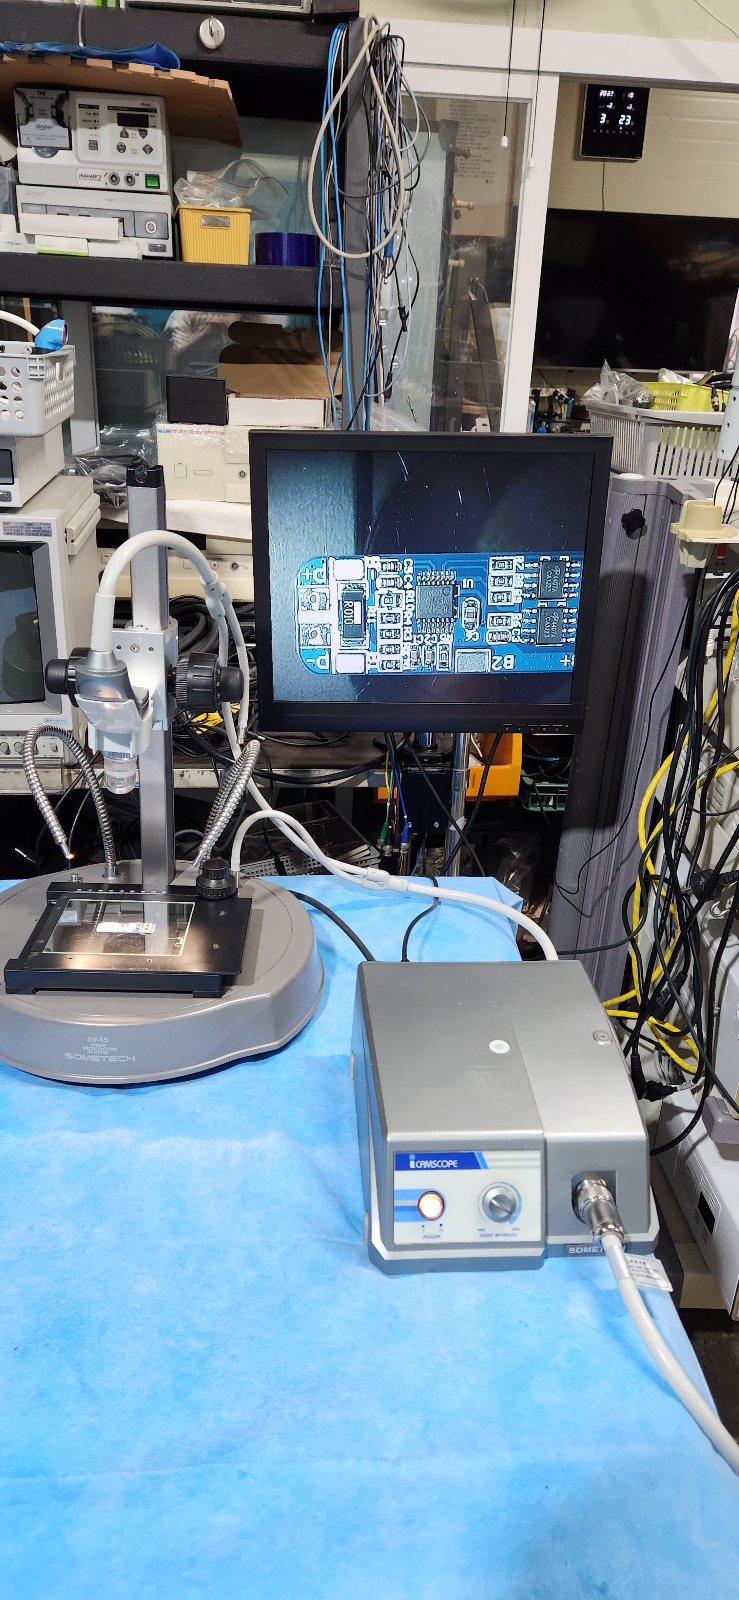 Sometech SV-55 Video Microscope System